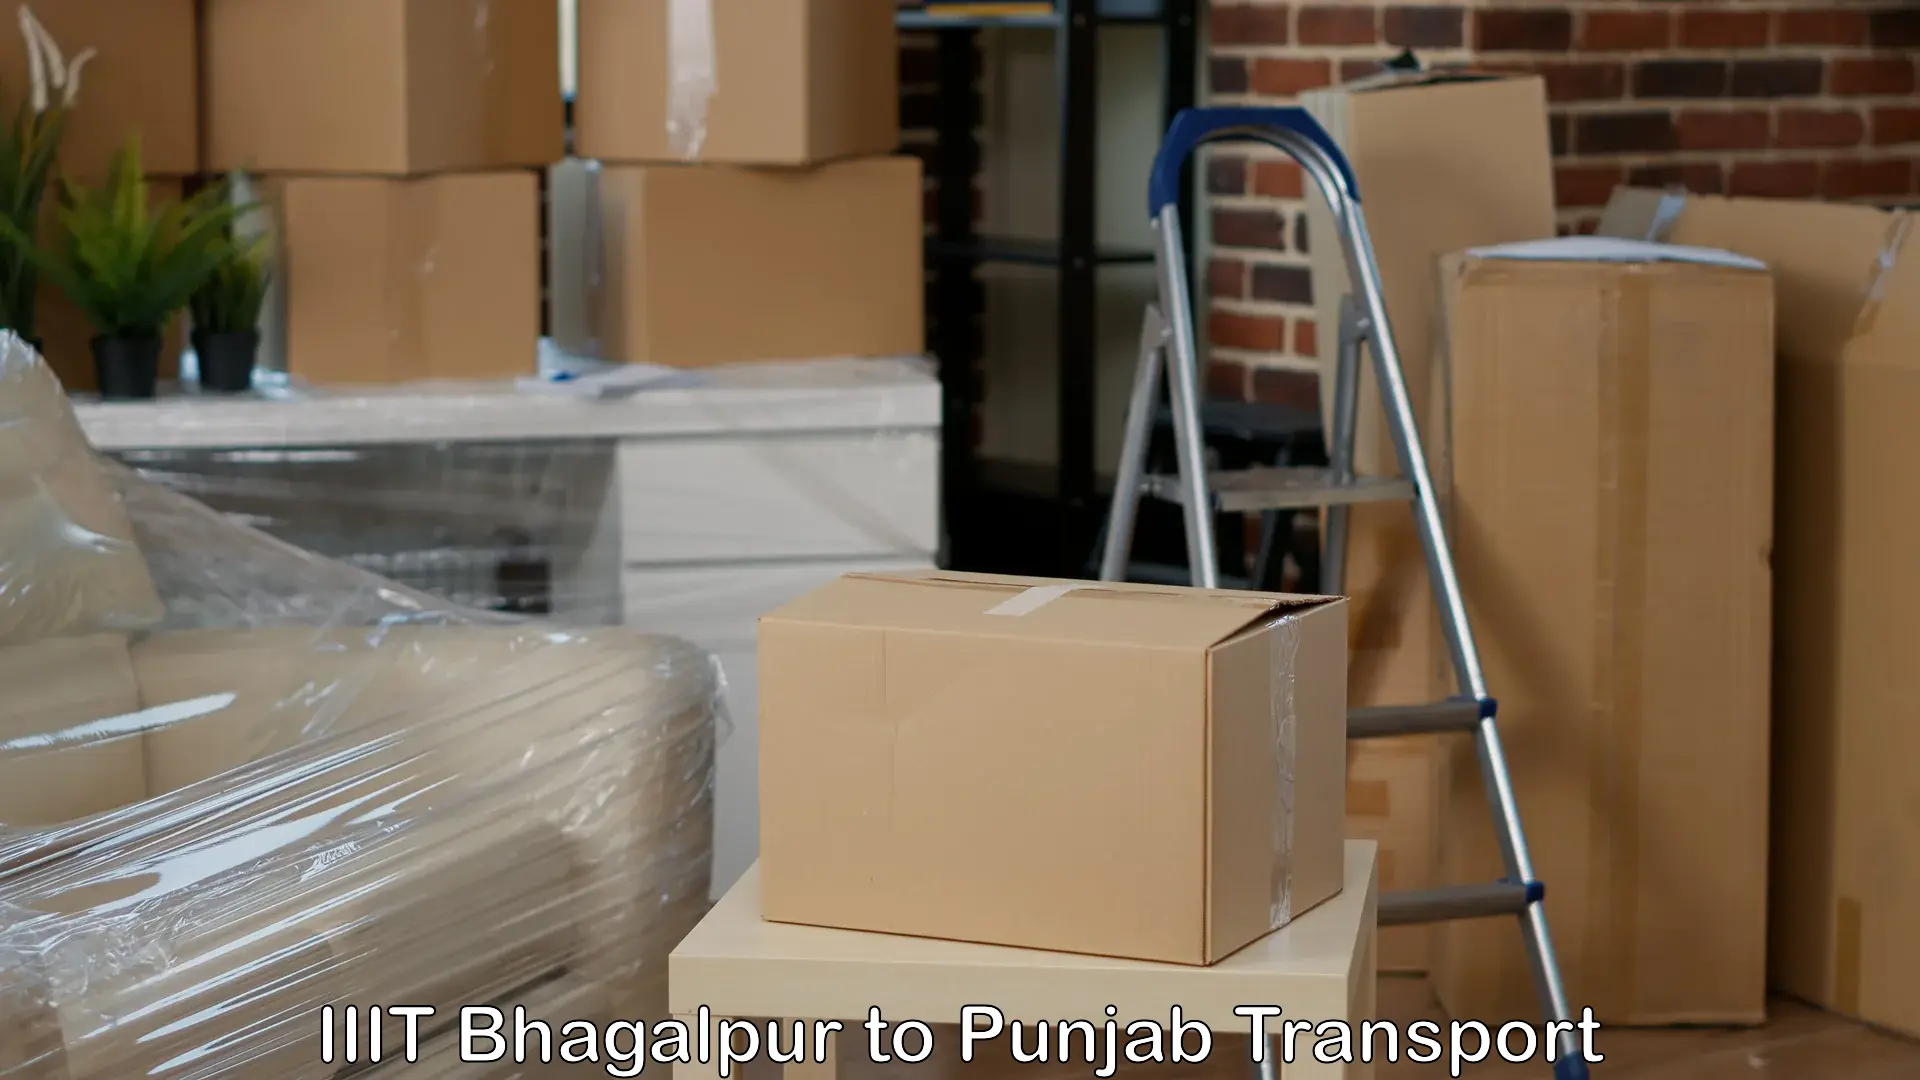 Truck transport companies in India IIIT Bhagalpur to Mohali